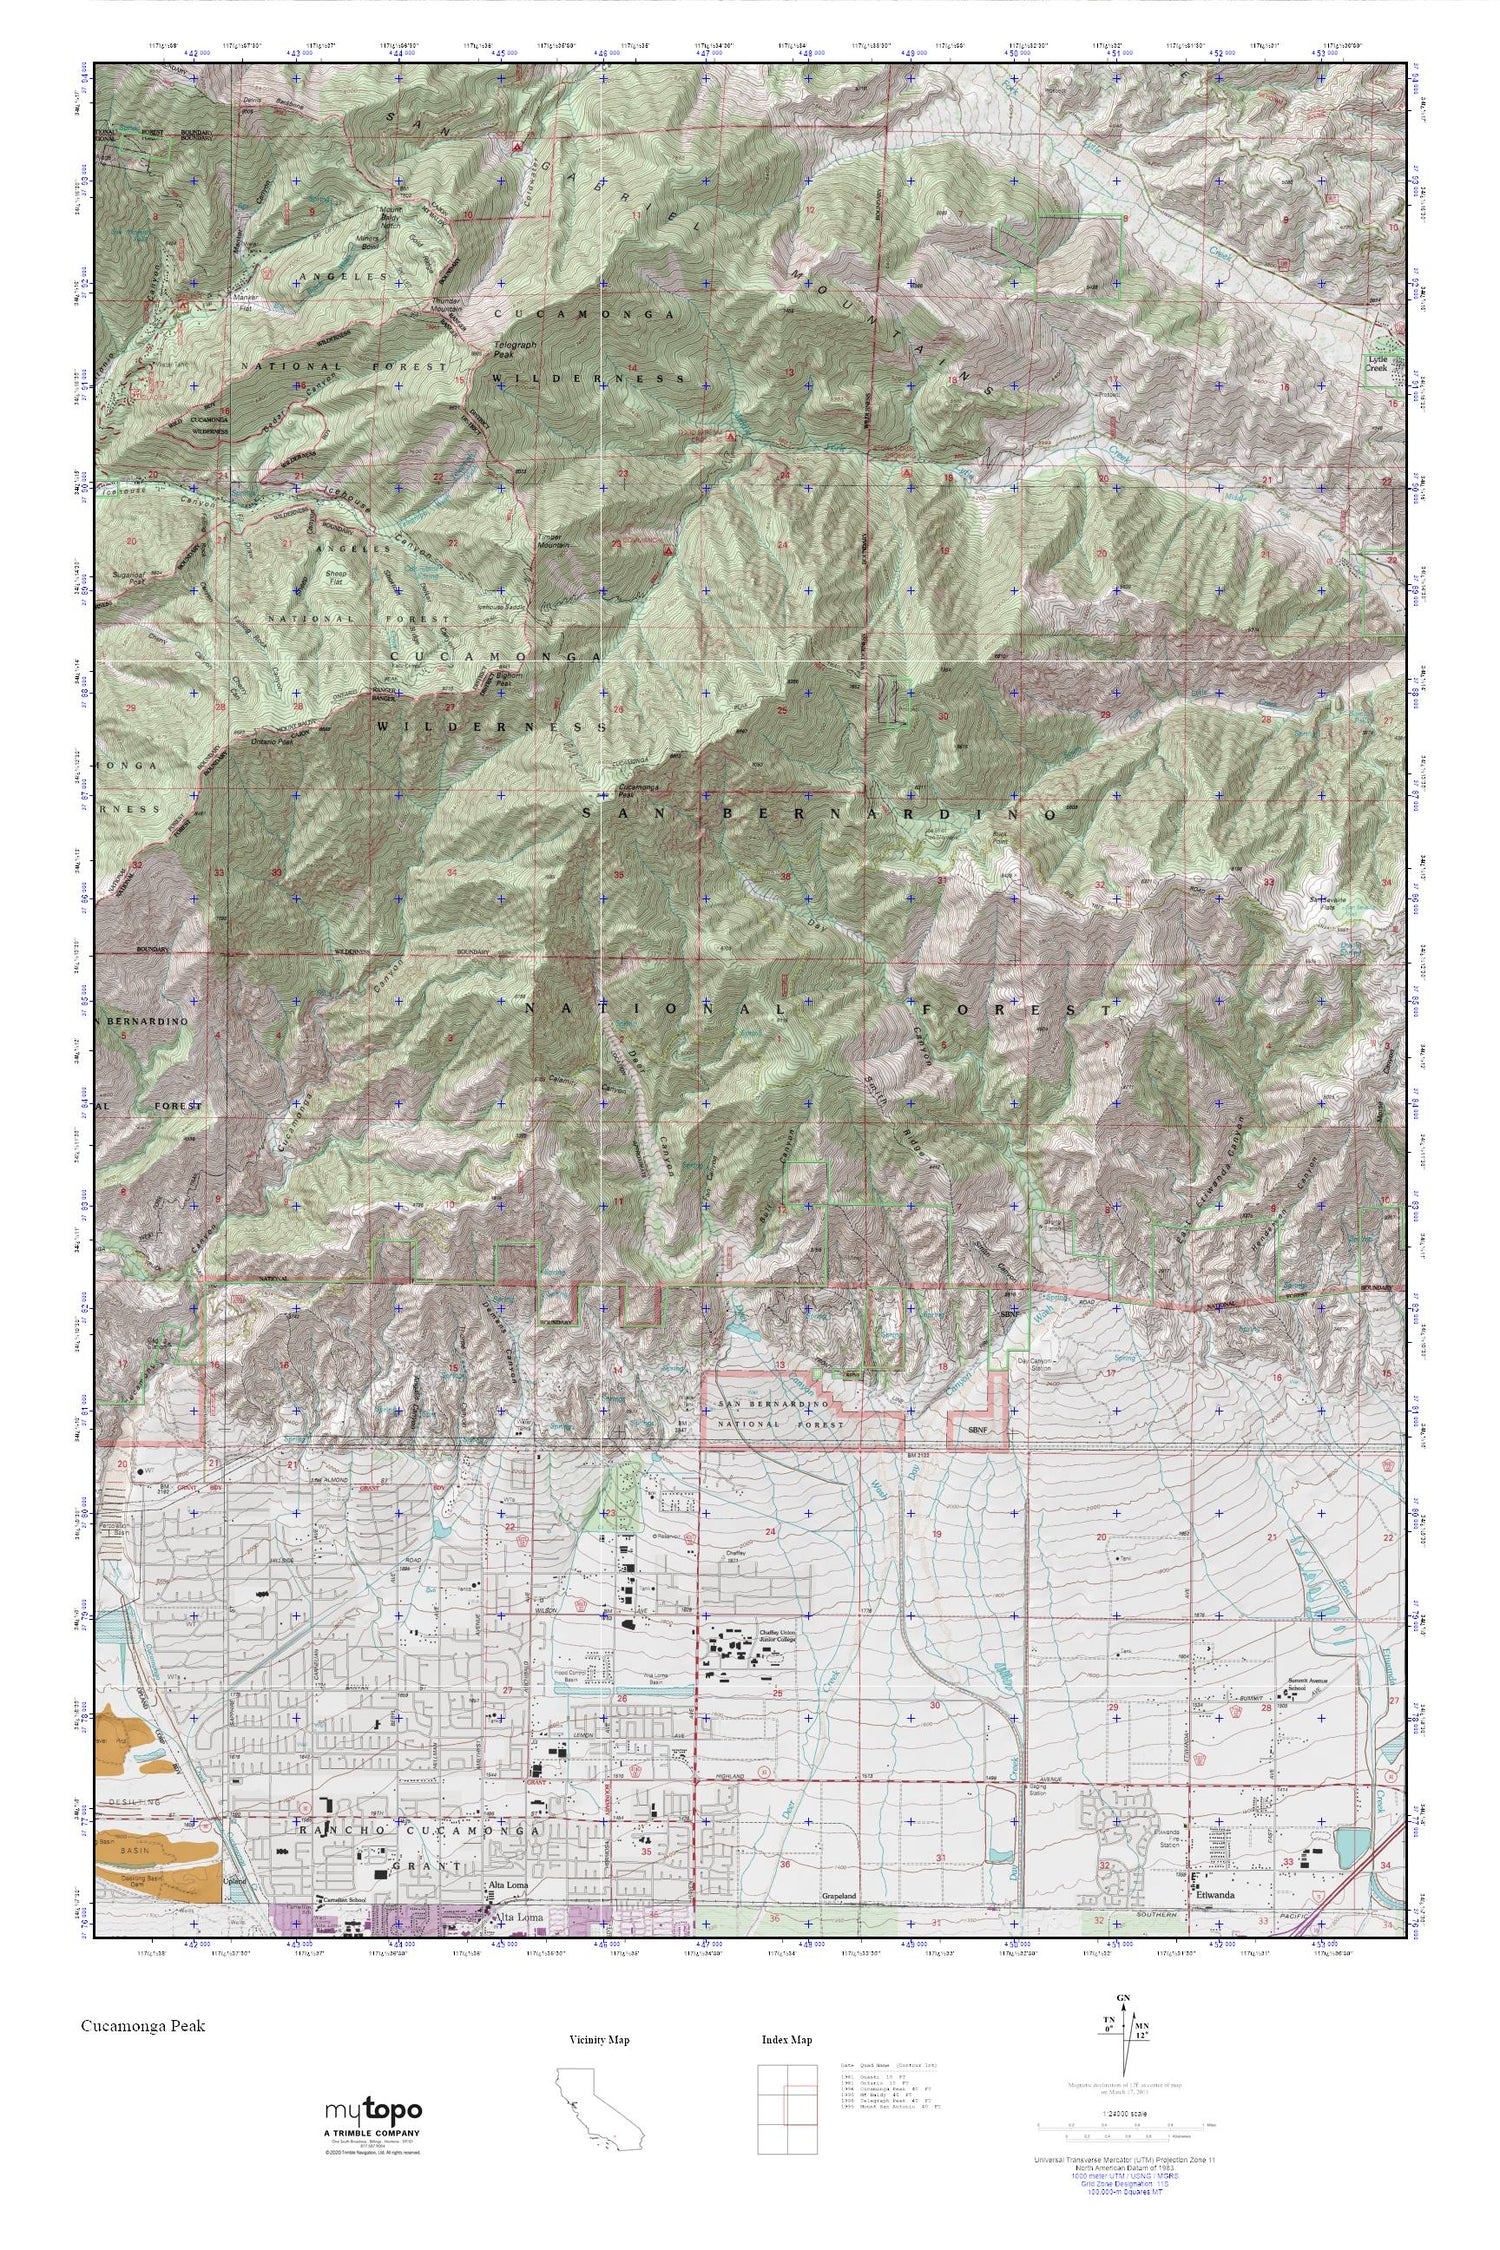 Cucamonga Peak MyTopo Explorer Series Map Image